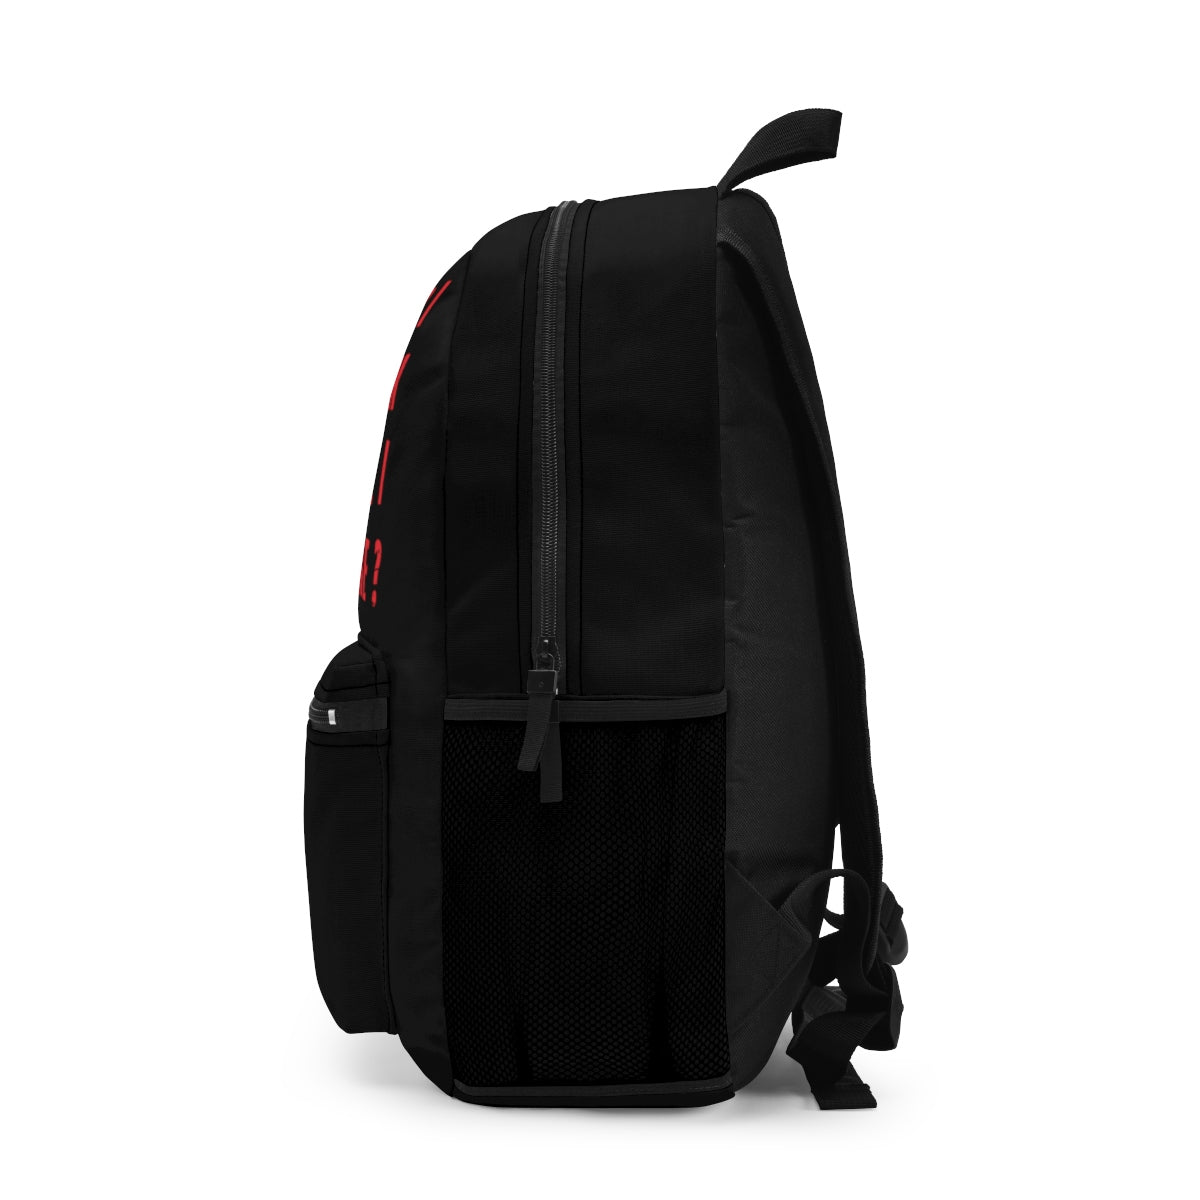 Deadpool 'Like I Care' Backpack (Made in USA) - Alpha Dawg Designs